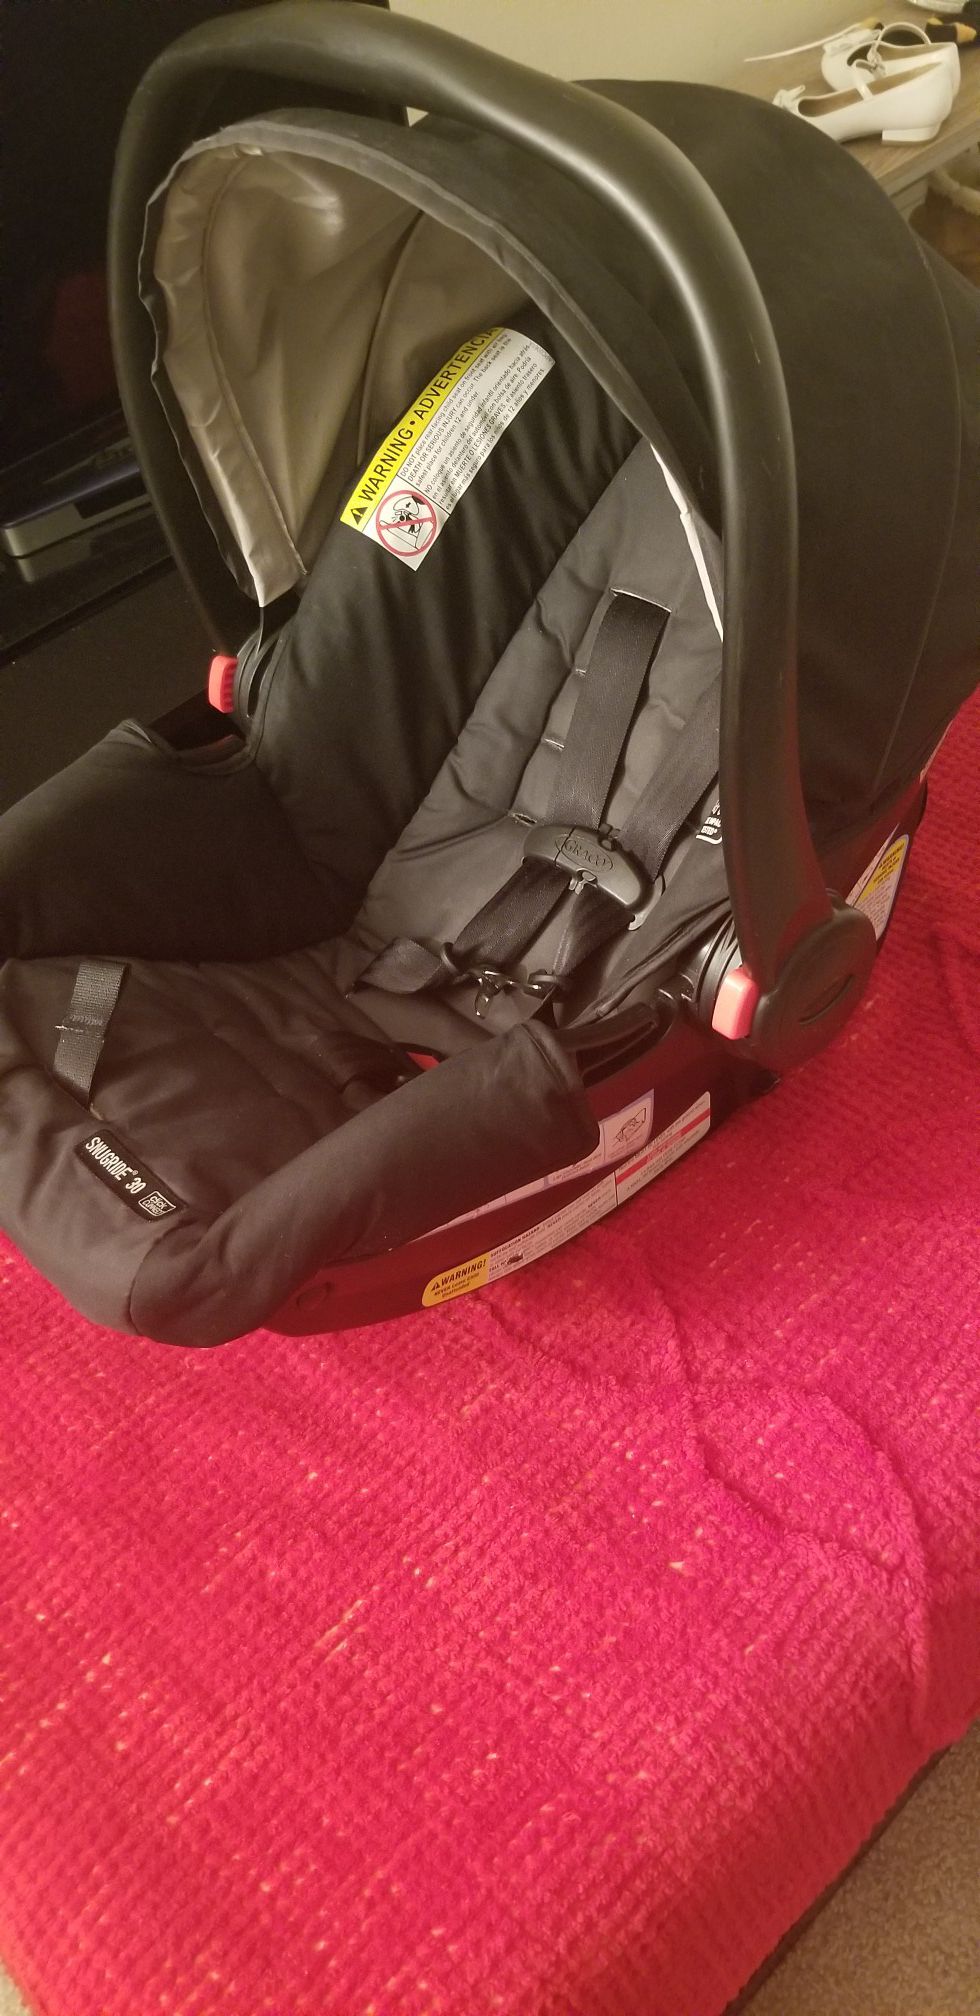 Graco Click Connect Infant Car seat